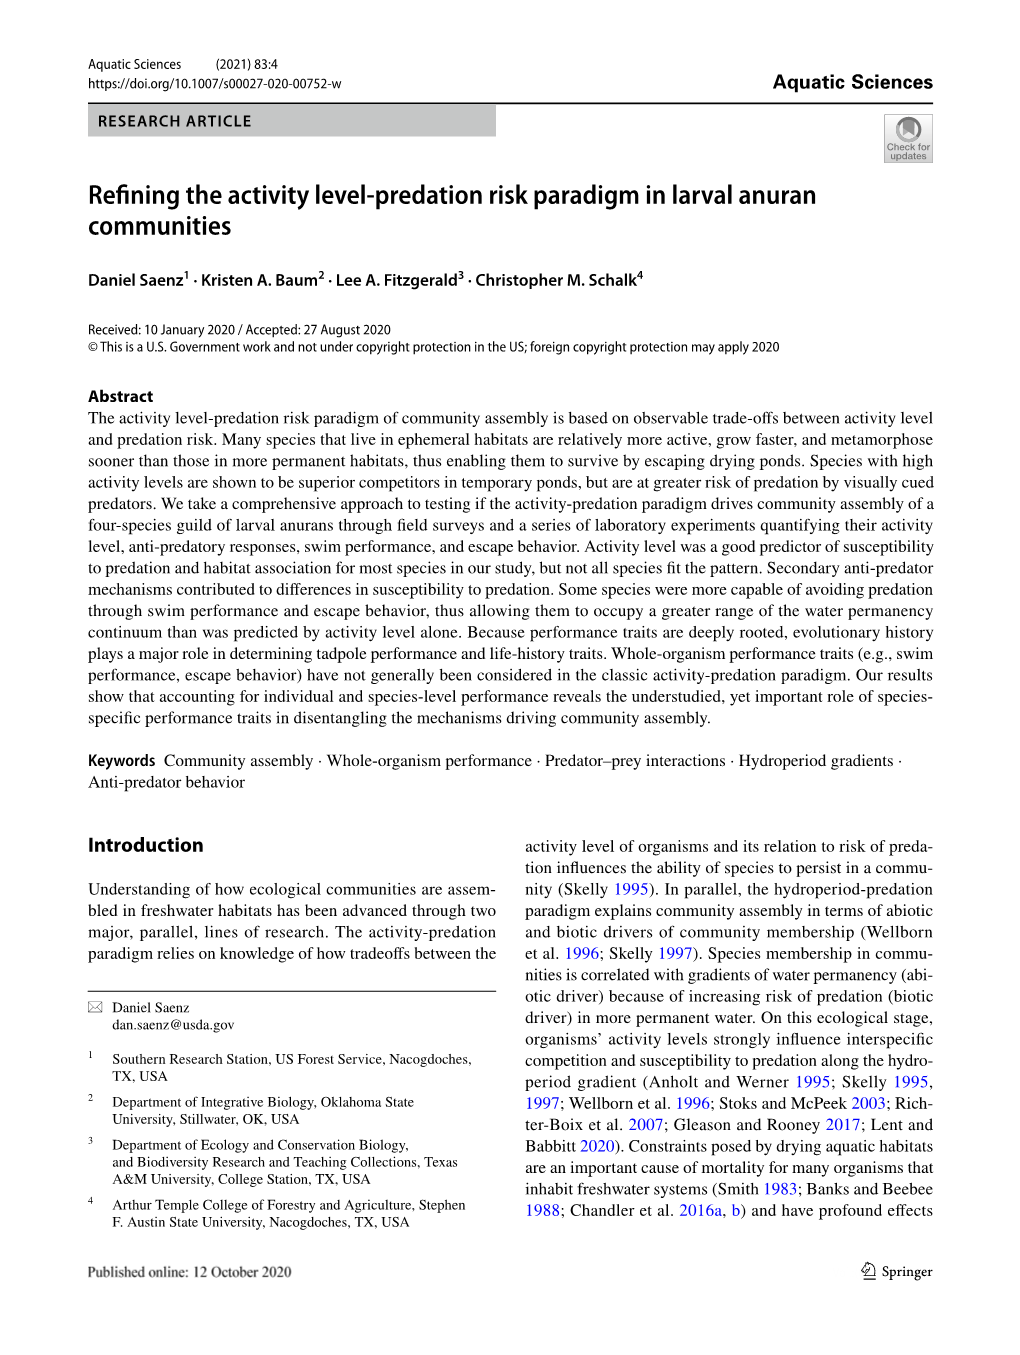 Refining the Activity Level-Predation Risk Paradigm in Larval Anuran